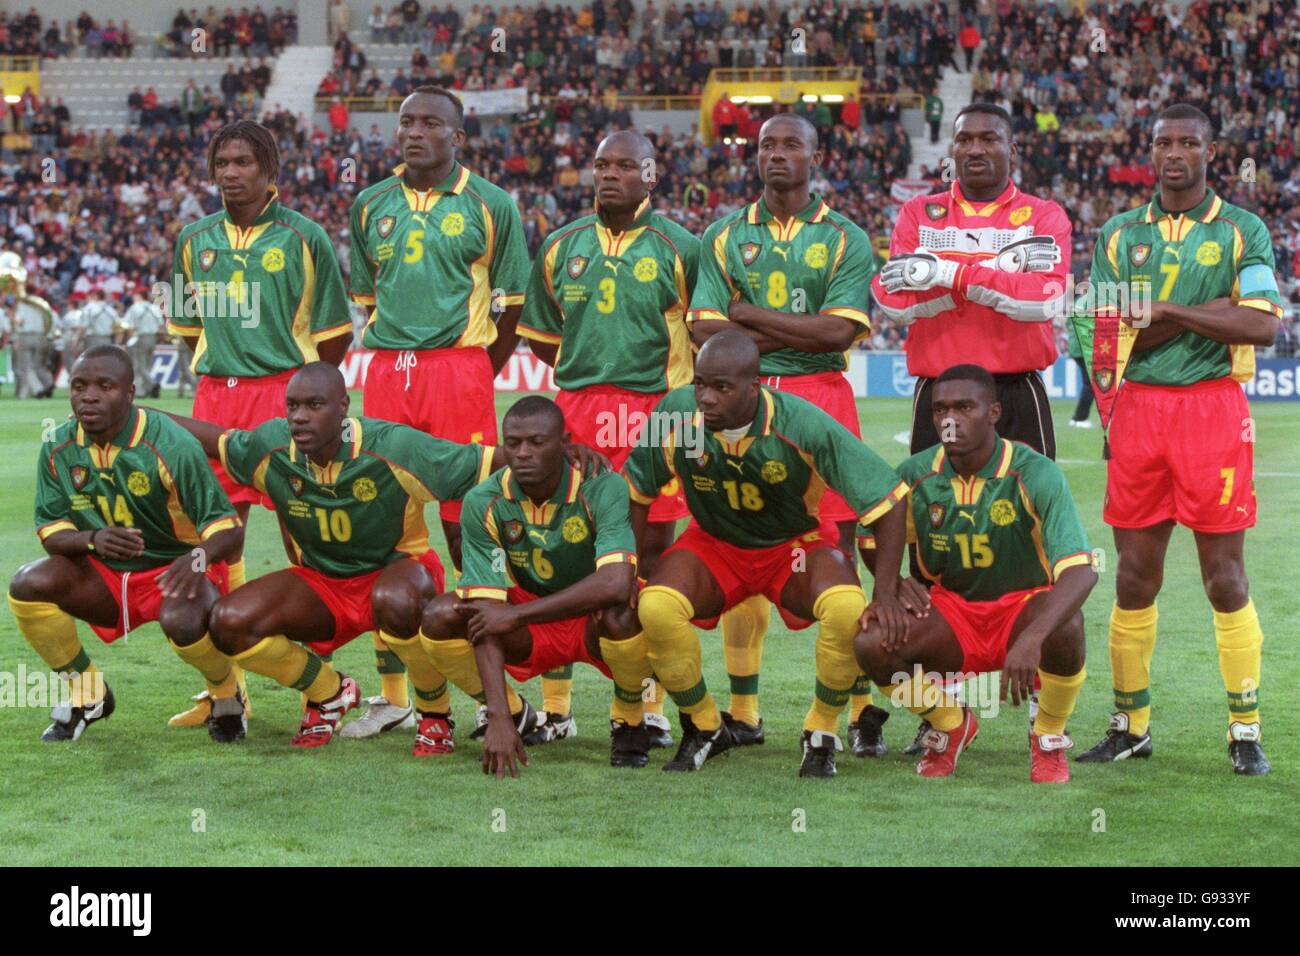 Fußball - Weltmeisterschaft Frankreich 98 - Gruppe B - Kamerun gegen  Österreich. Kamerun-Teamgruppe Stockfotografie - Alamy